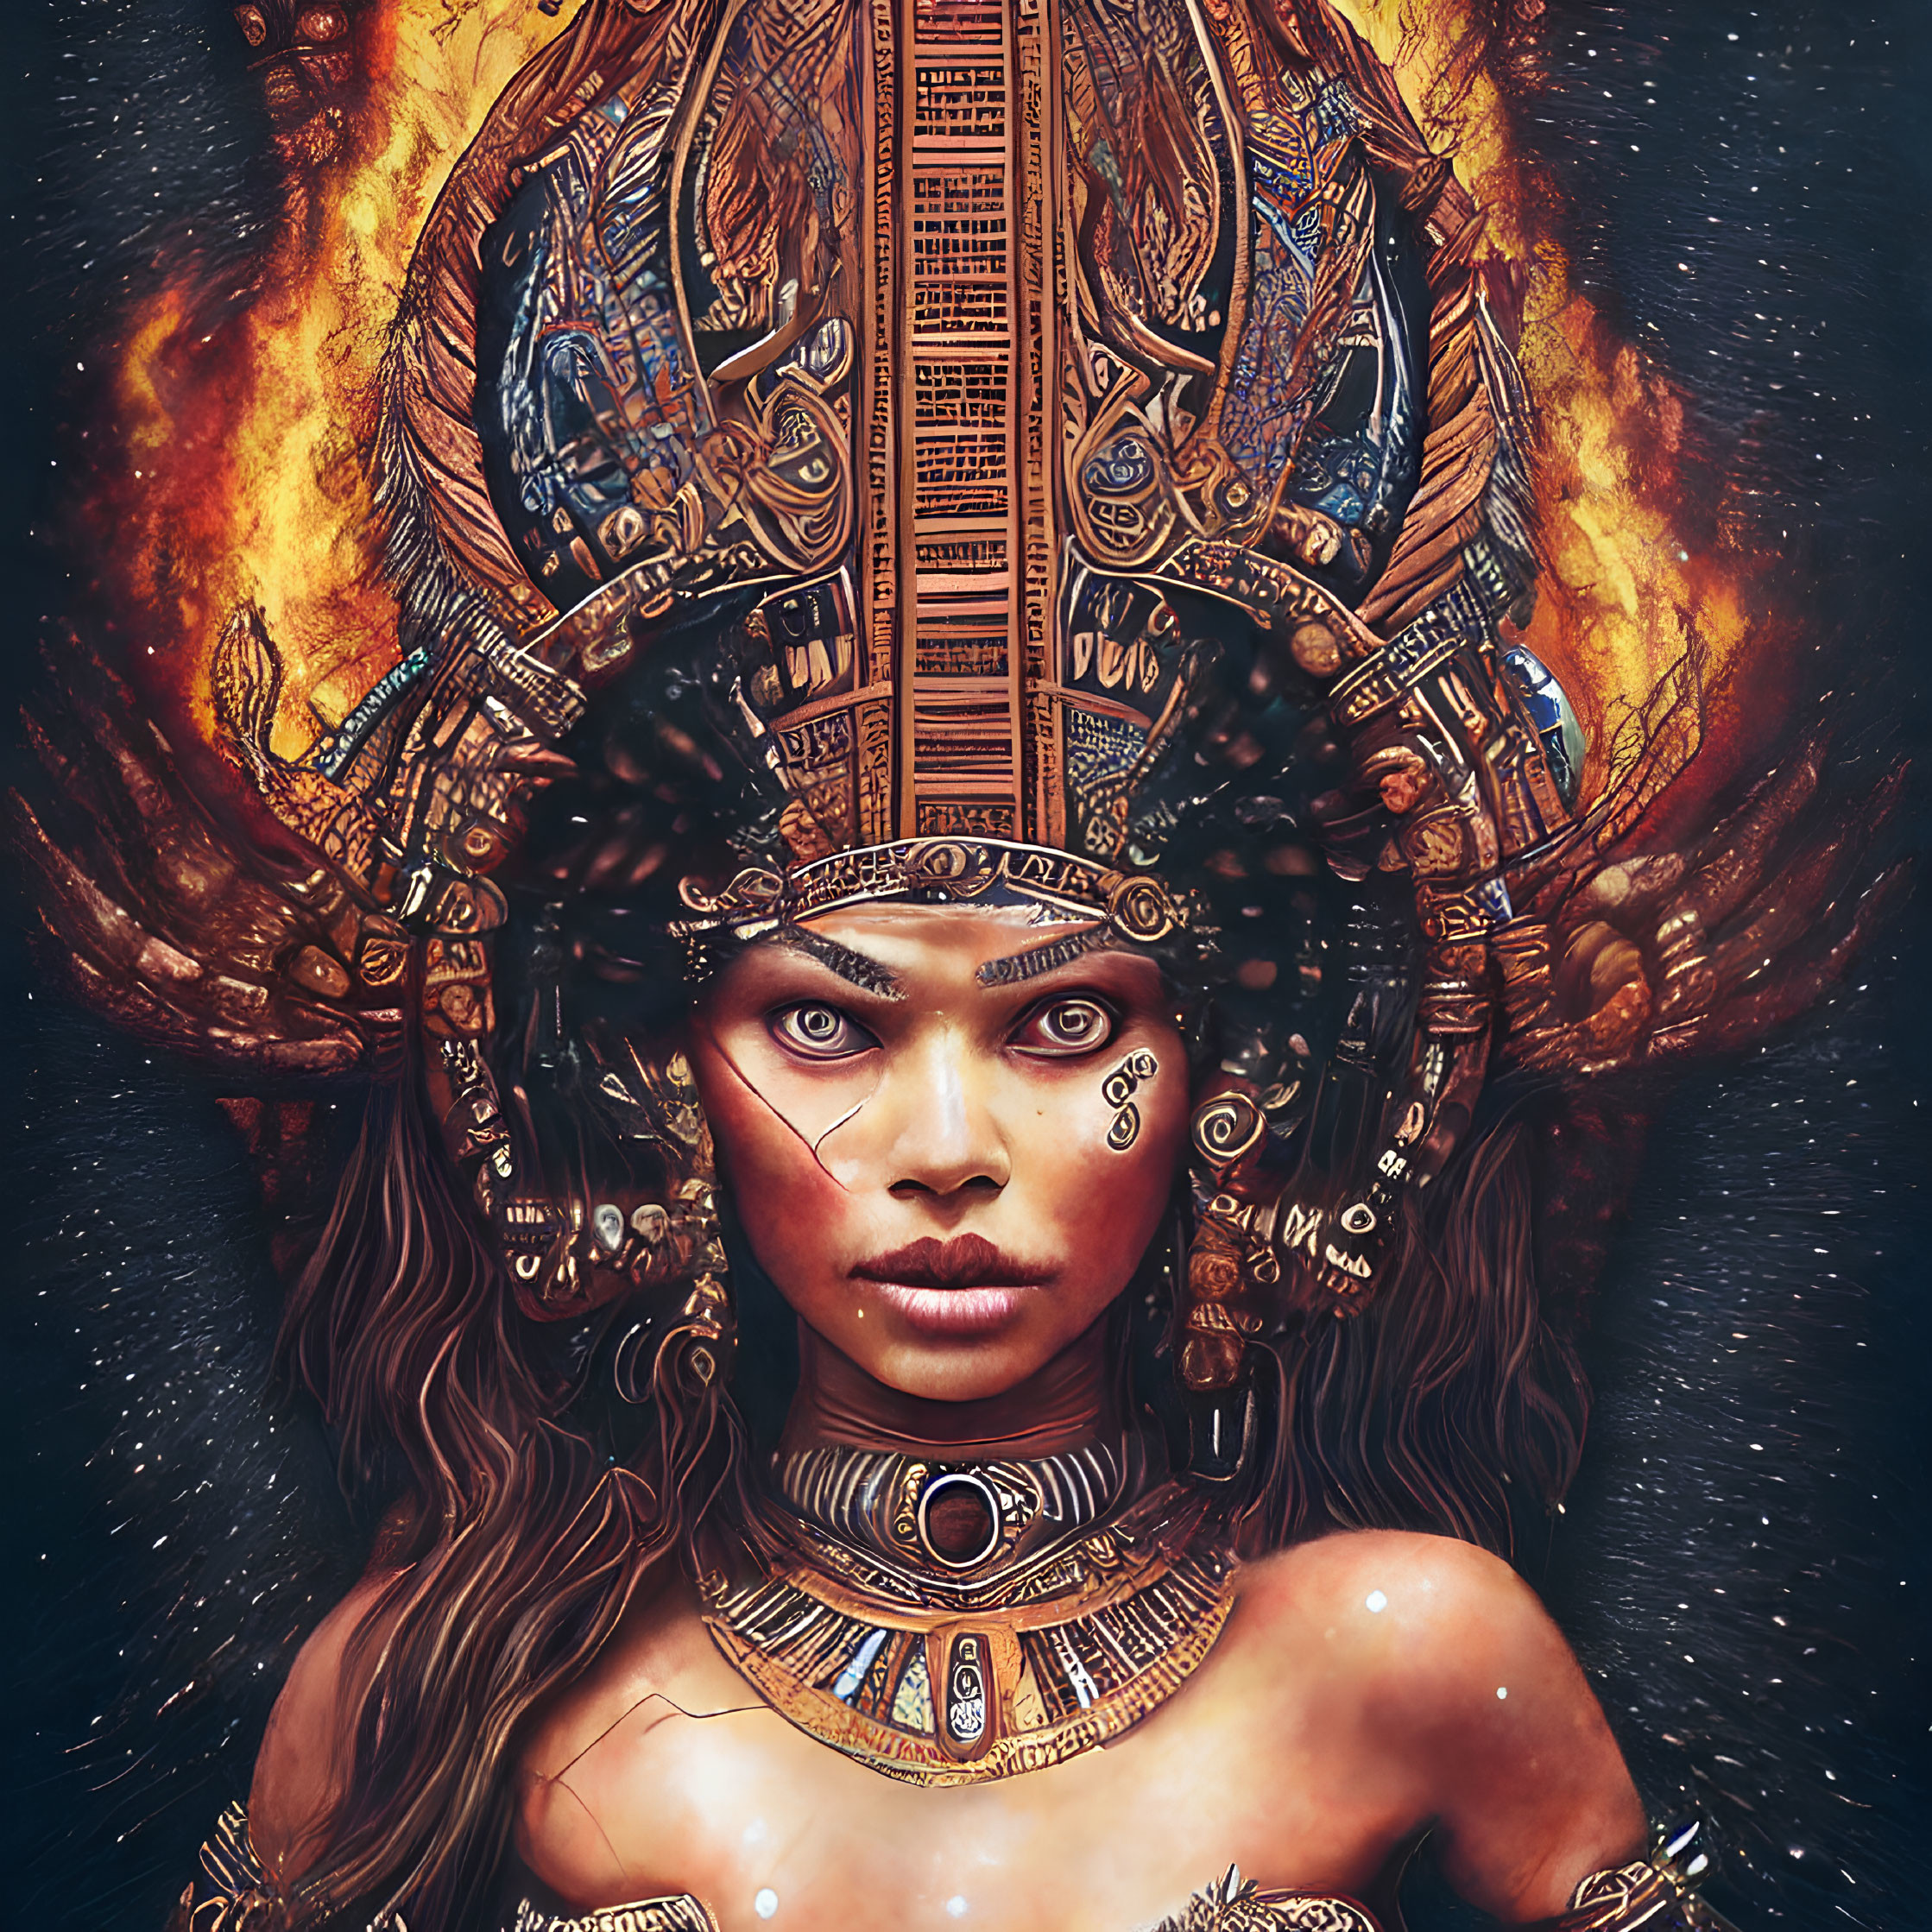 Striking-eyed woman in ornate headdress against cosmic backdrop